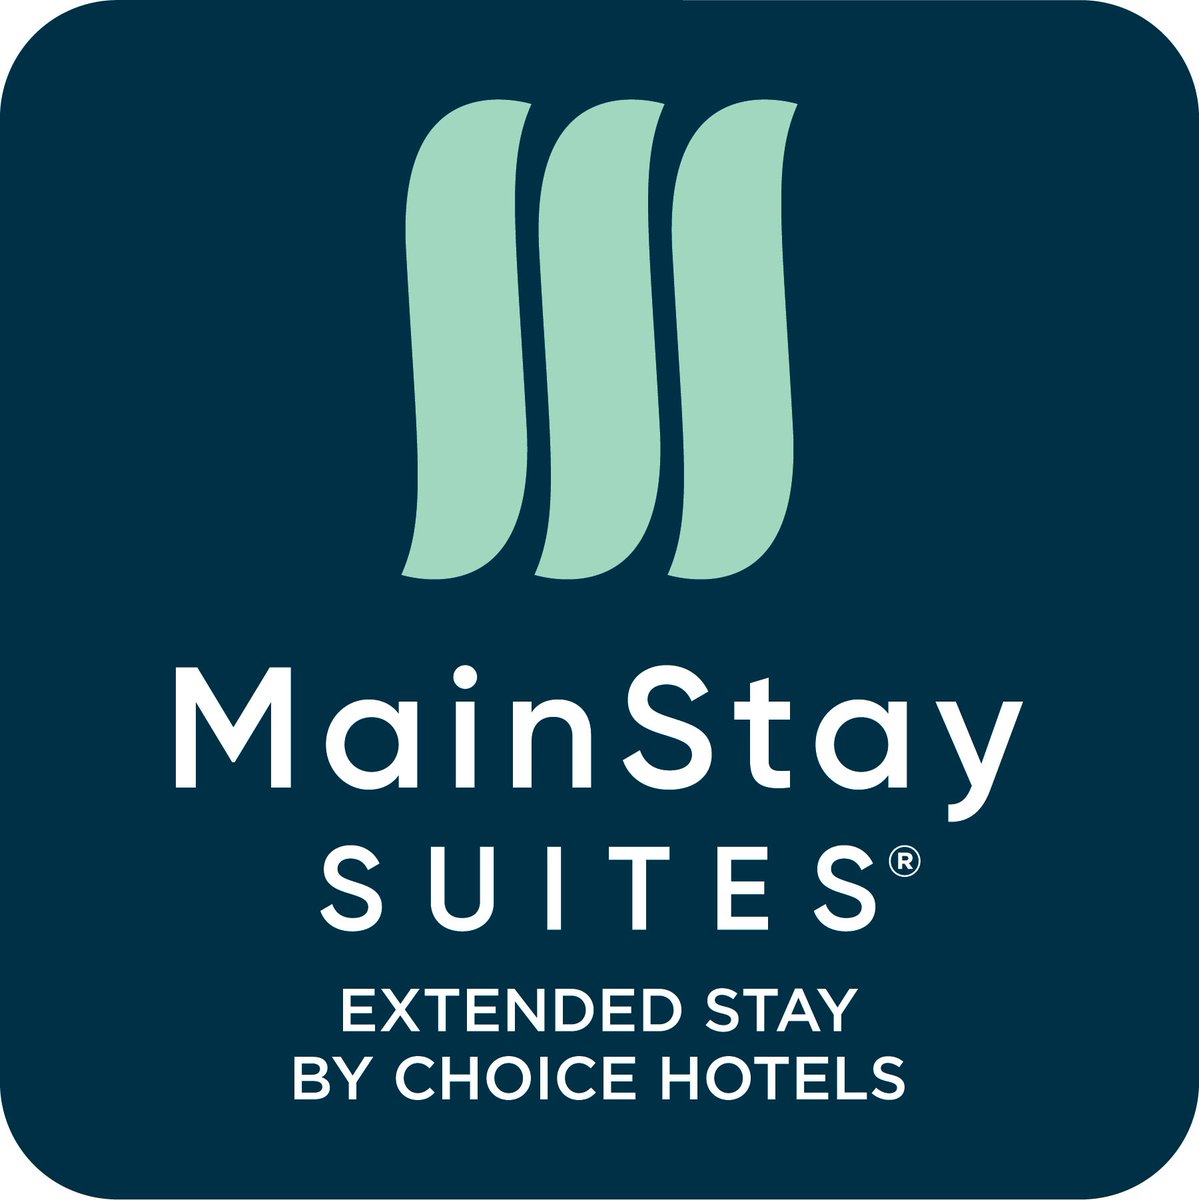 MainStay Suites Winnipeg: Your cozy retreat and event oasis in the heart of Winnipeg. 🏨✨
canadianbusinessphonebook.com/mb/MainStay_Su…
#WinnipegMB #Accommodations #HotelsAndMotels #Suites #MeetingRooms #BanquetHall #MainStaySuitesWinnipeg